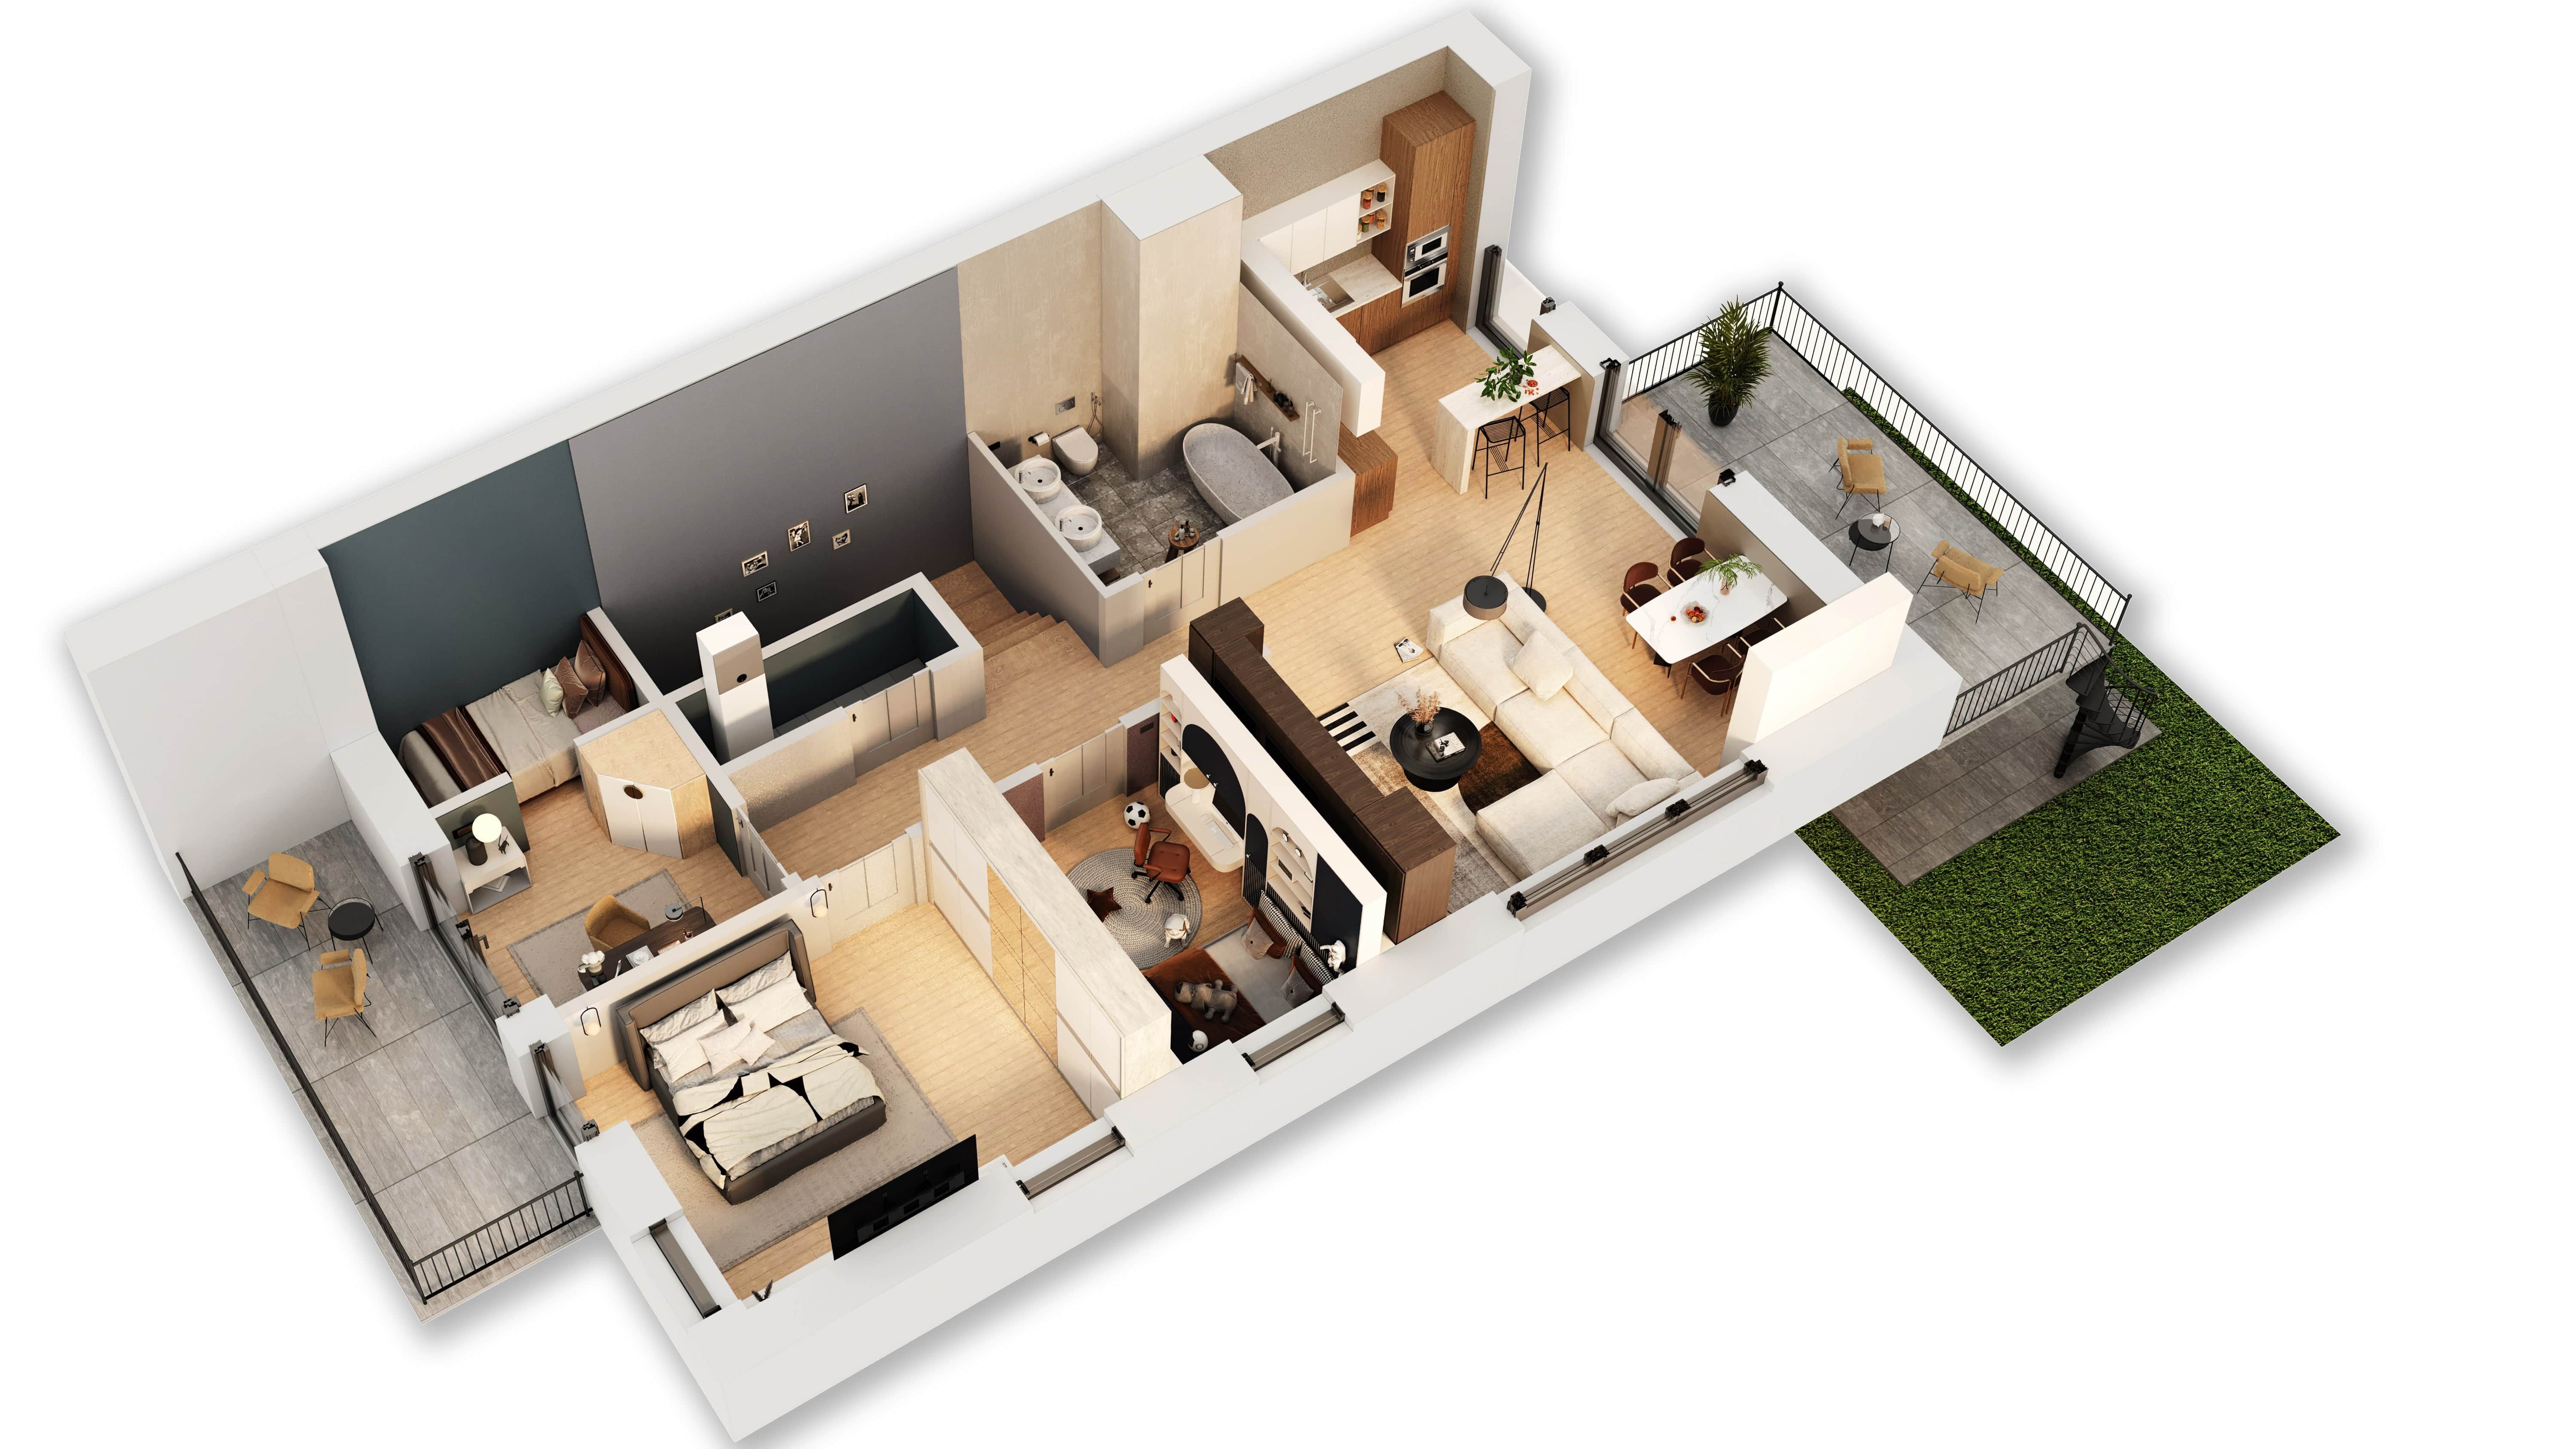 3D Apartment Floor Plan - The Future of Real Estate Presentations